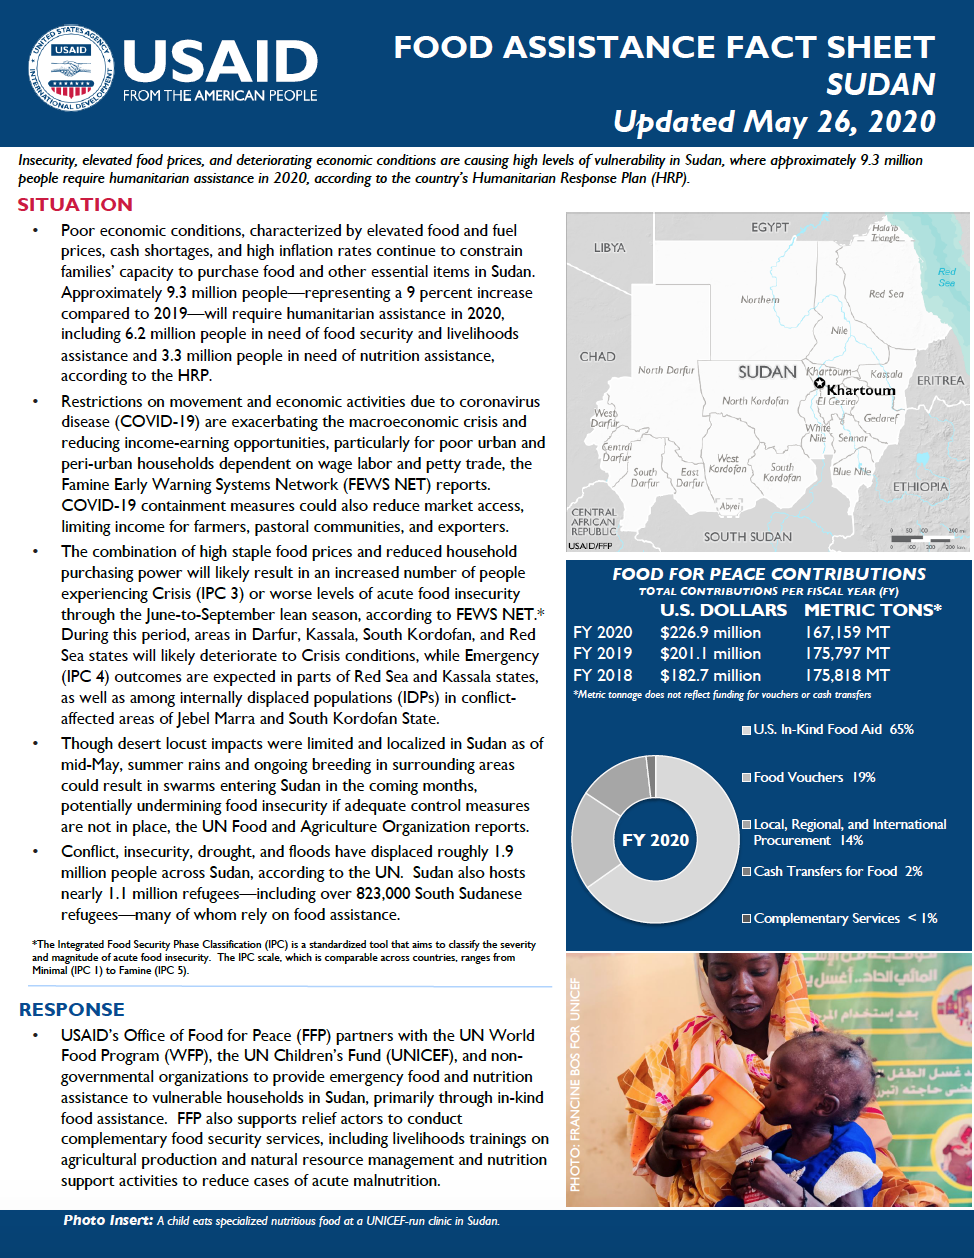 Food Assistance Fact Sheet - Sudan